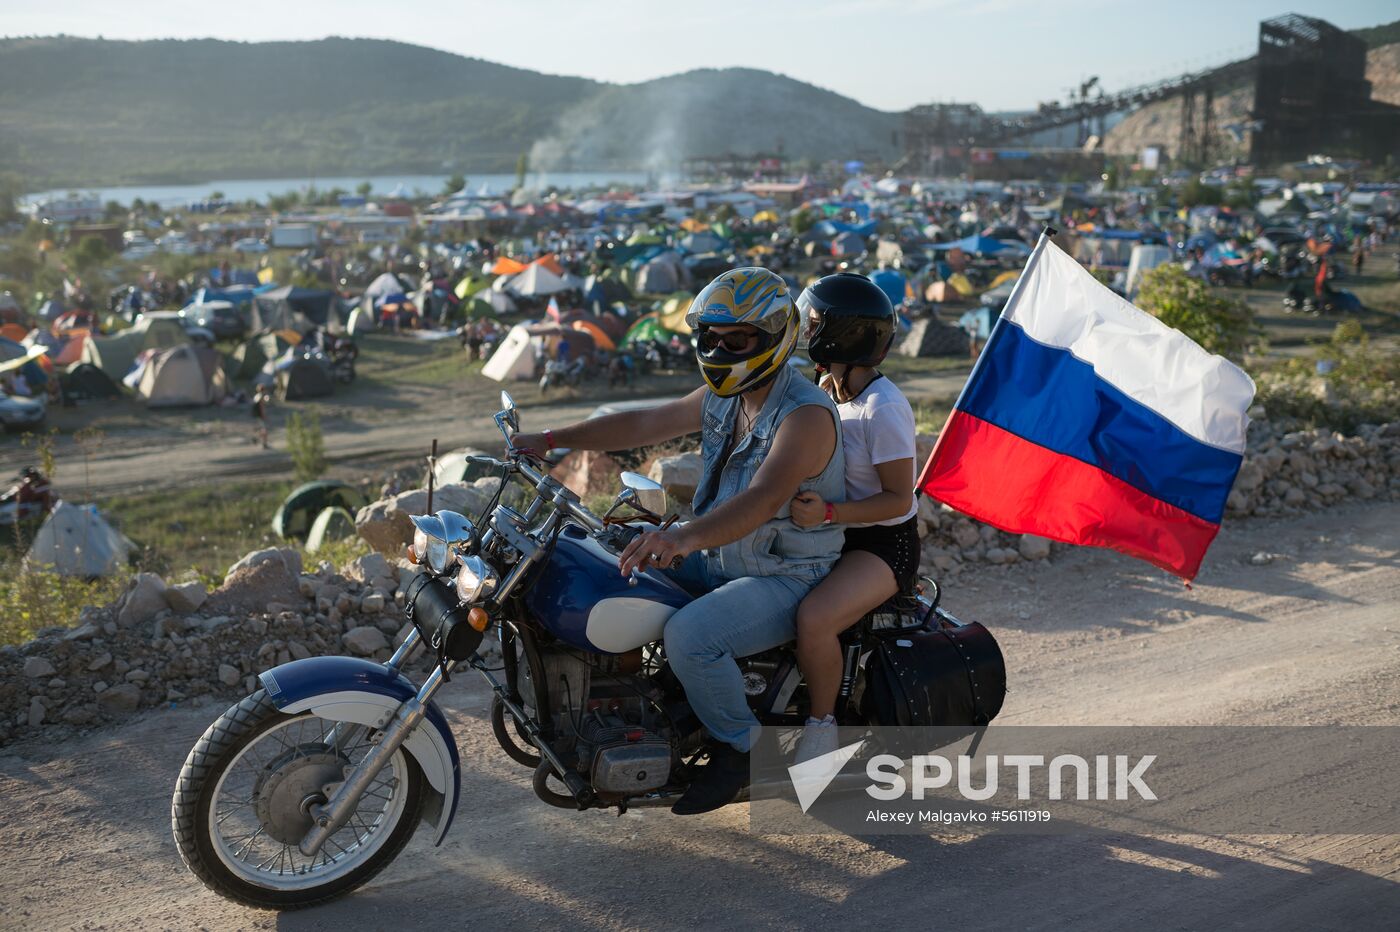 Sevastopol hosts Russian Dream bike show